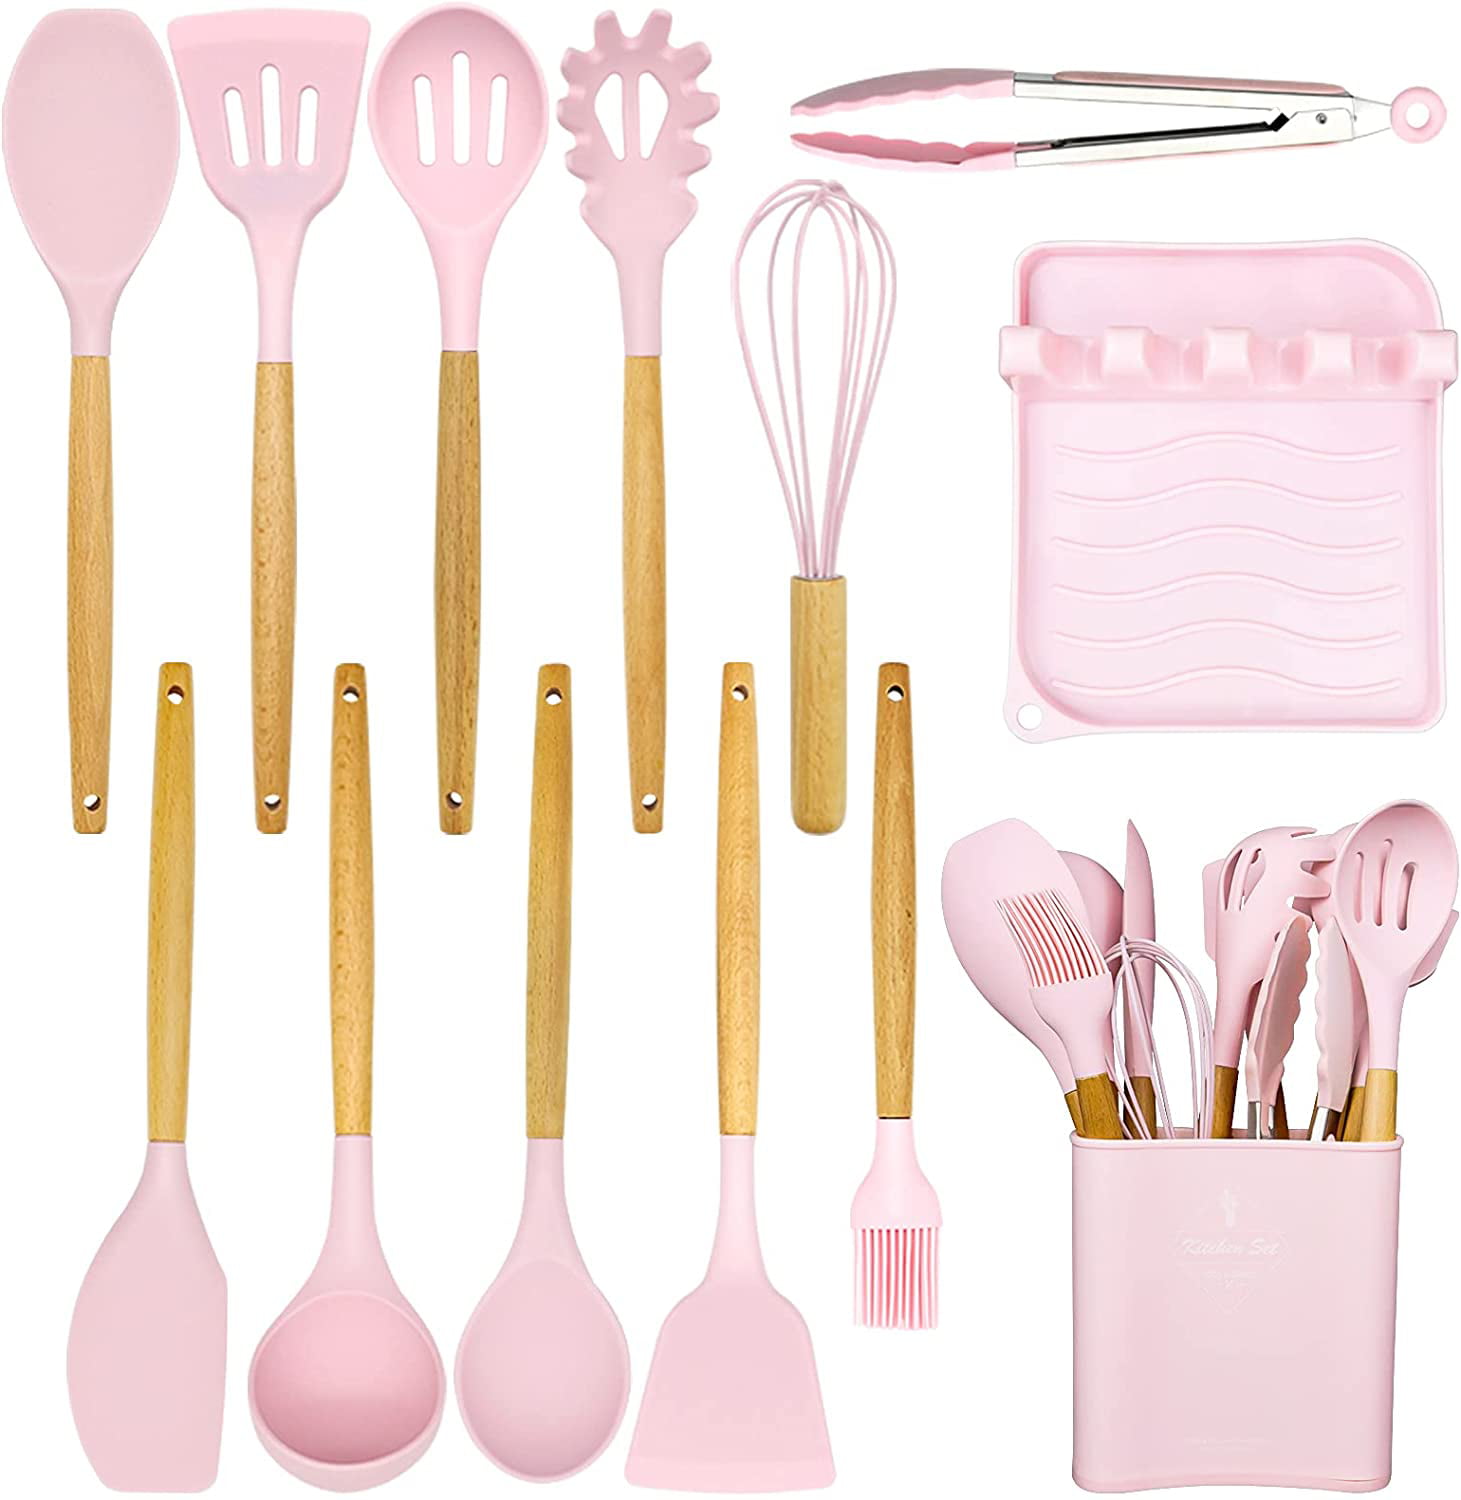 oannao Silicone Cooking Utensils Kitchen Utensil Set Pink